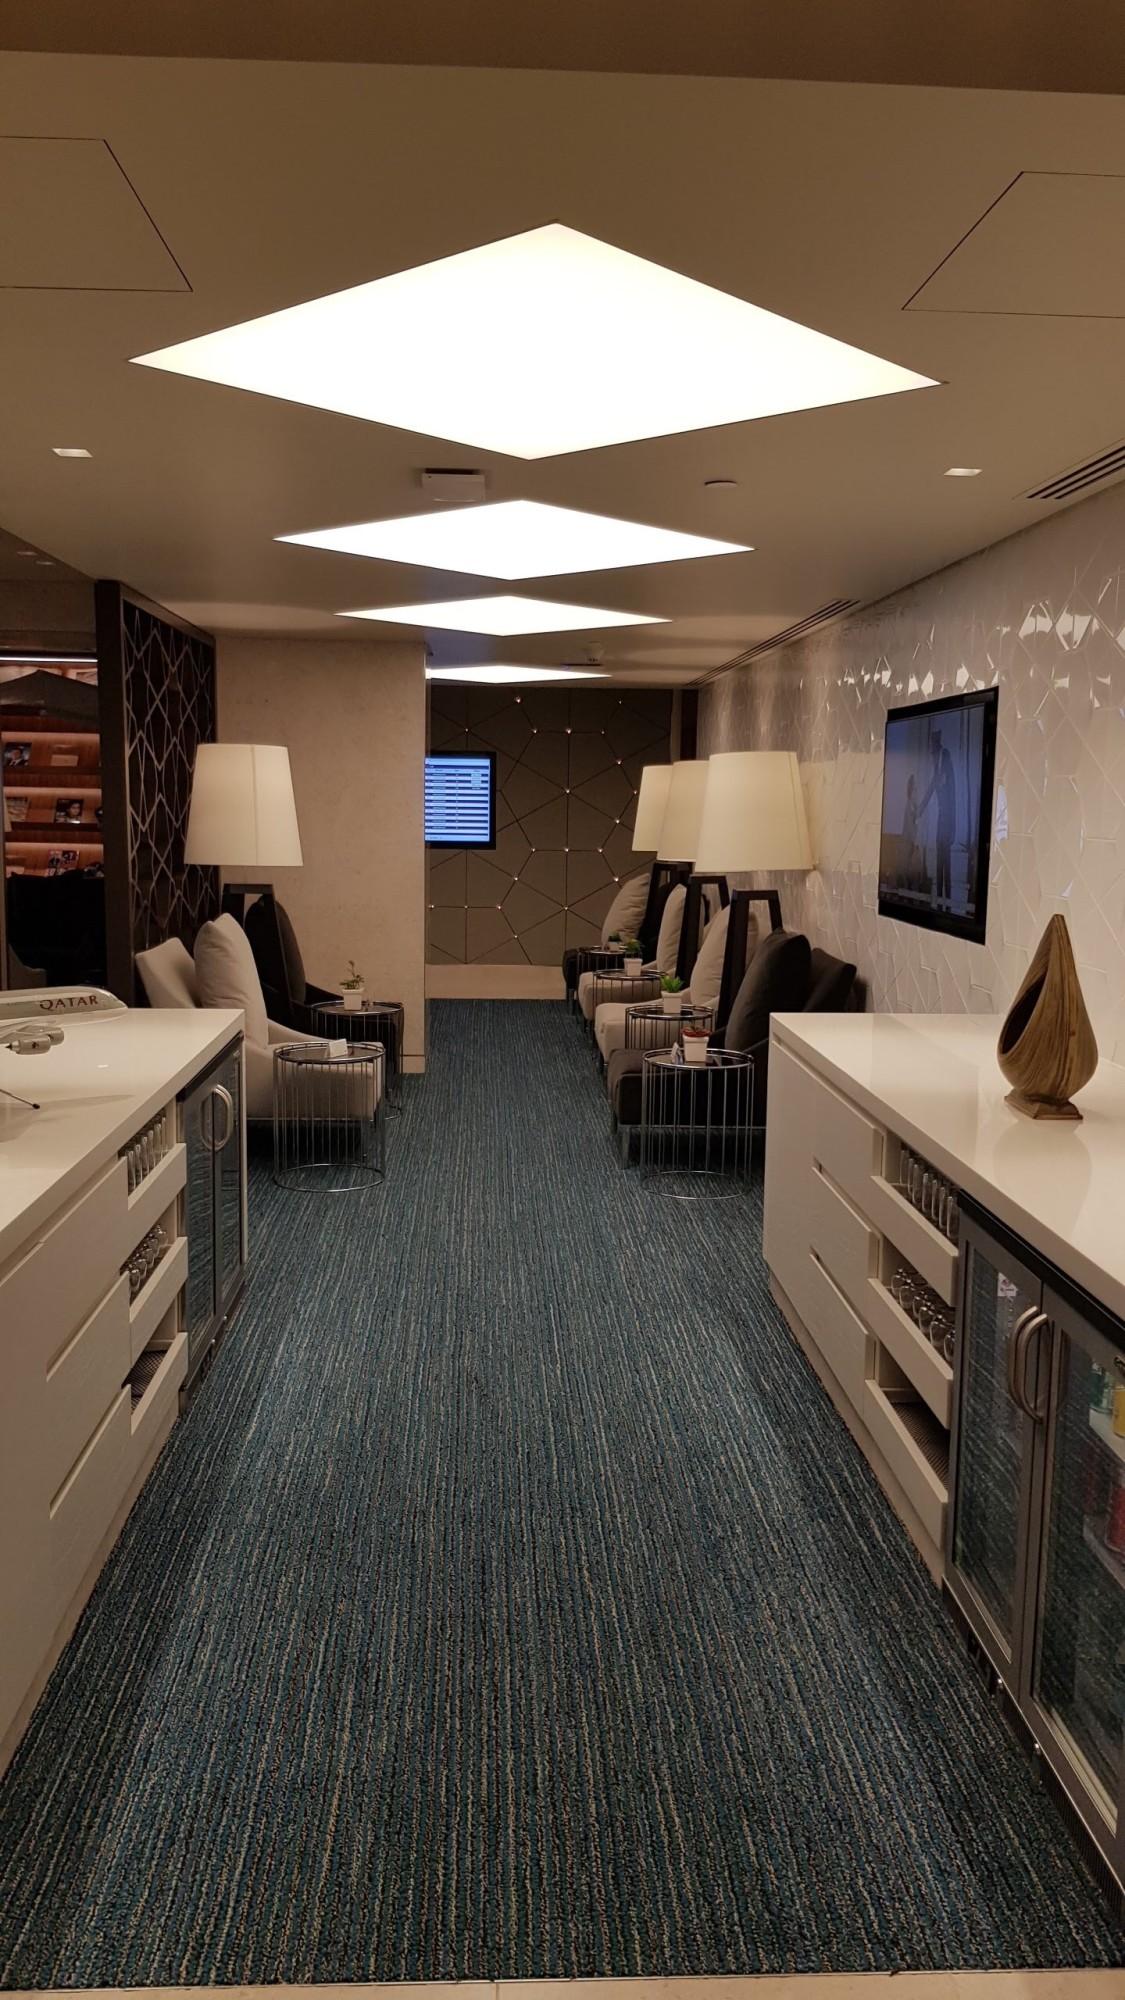 Qatar Airways Premium Lounge image 34 of 52